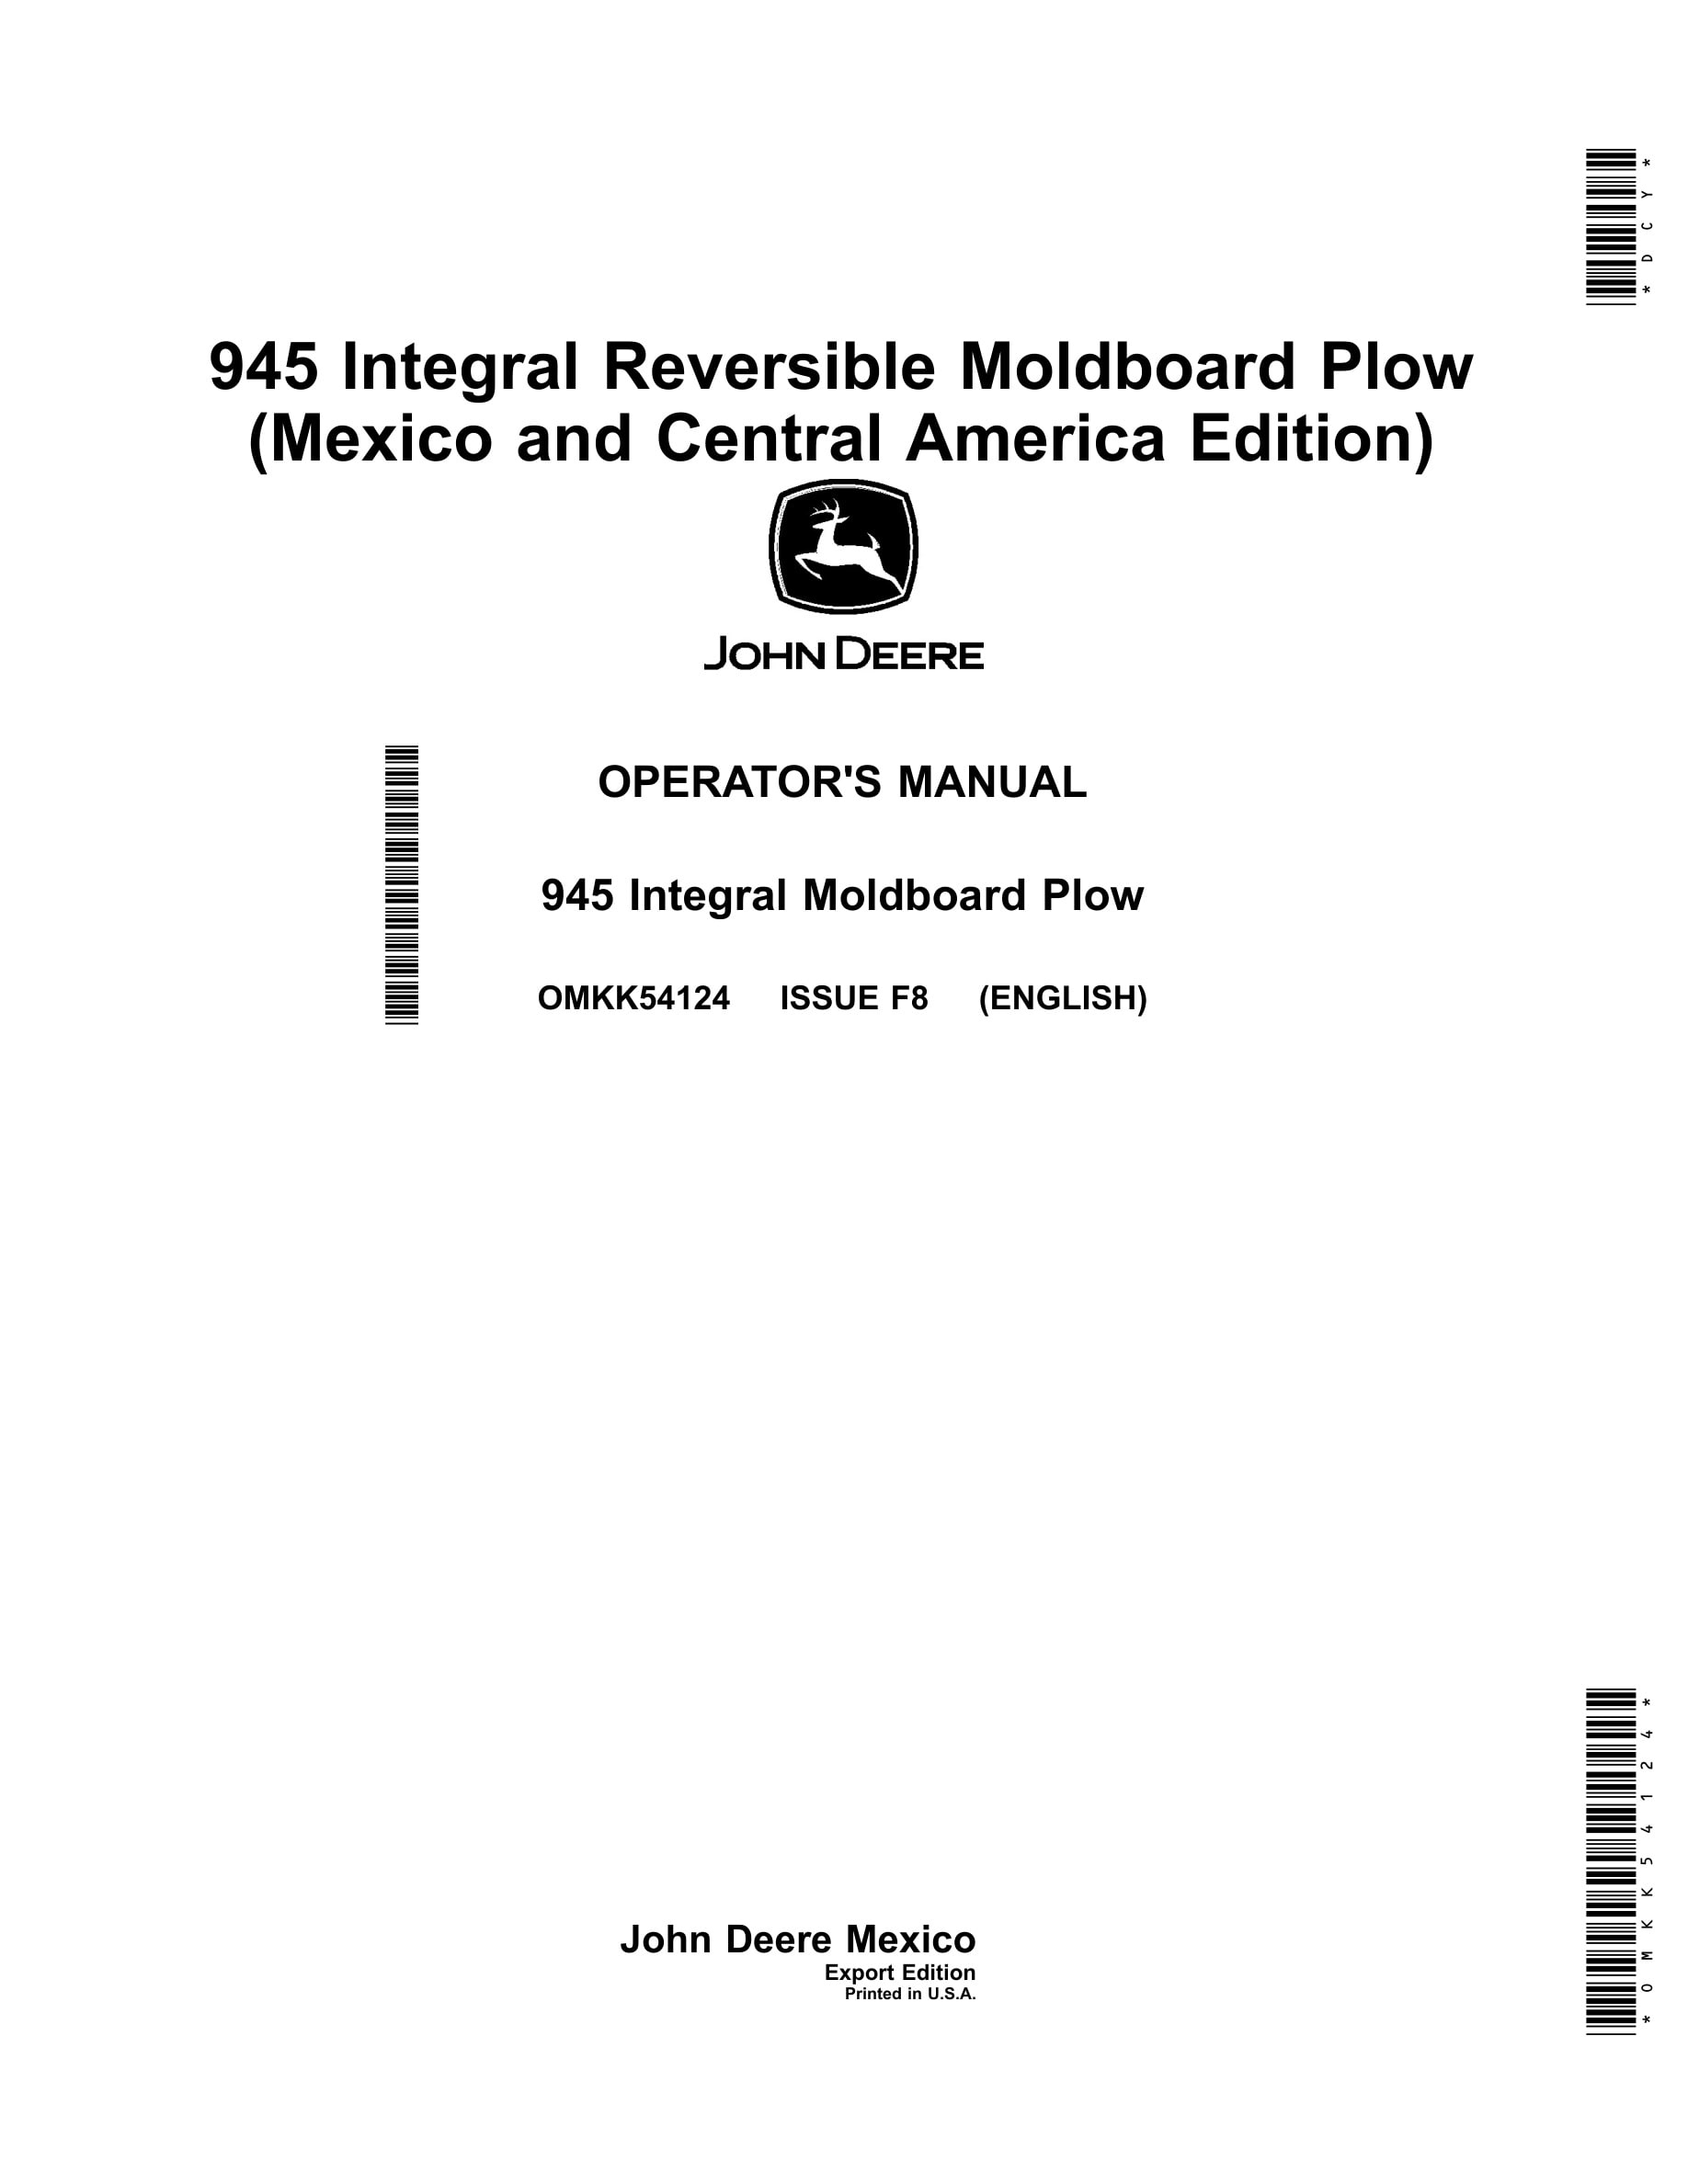 John Deere 945 Integral Moldboard Plow Operator Manual OMKK54124-1